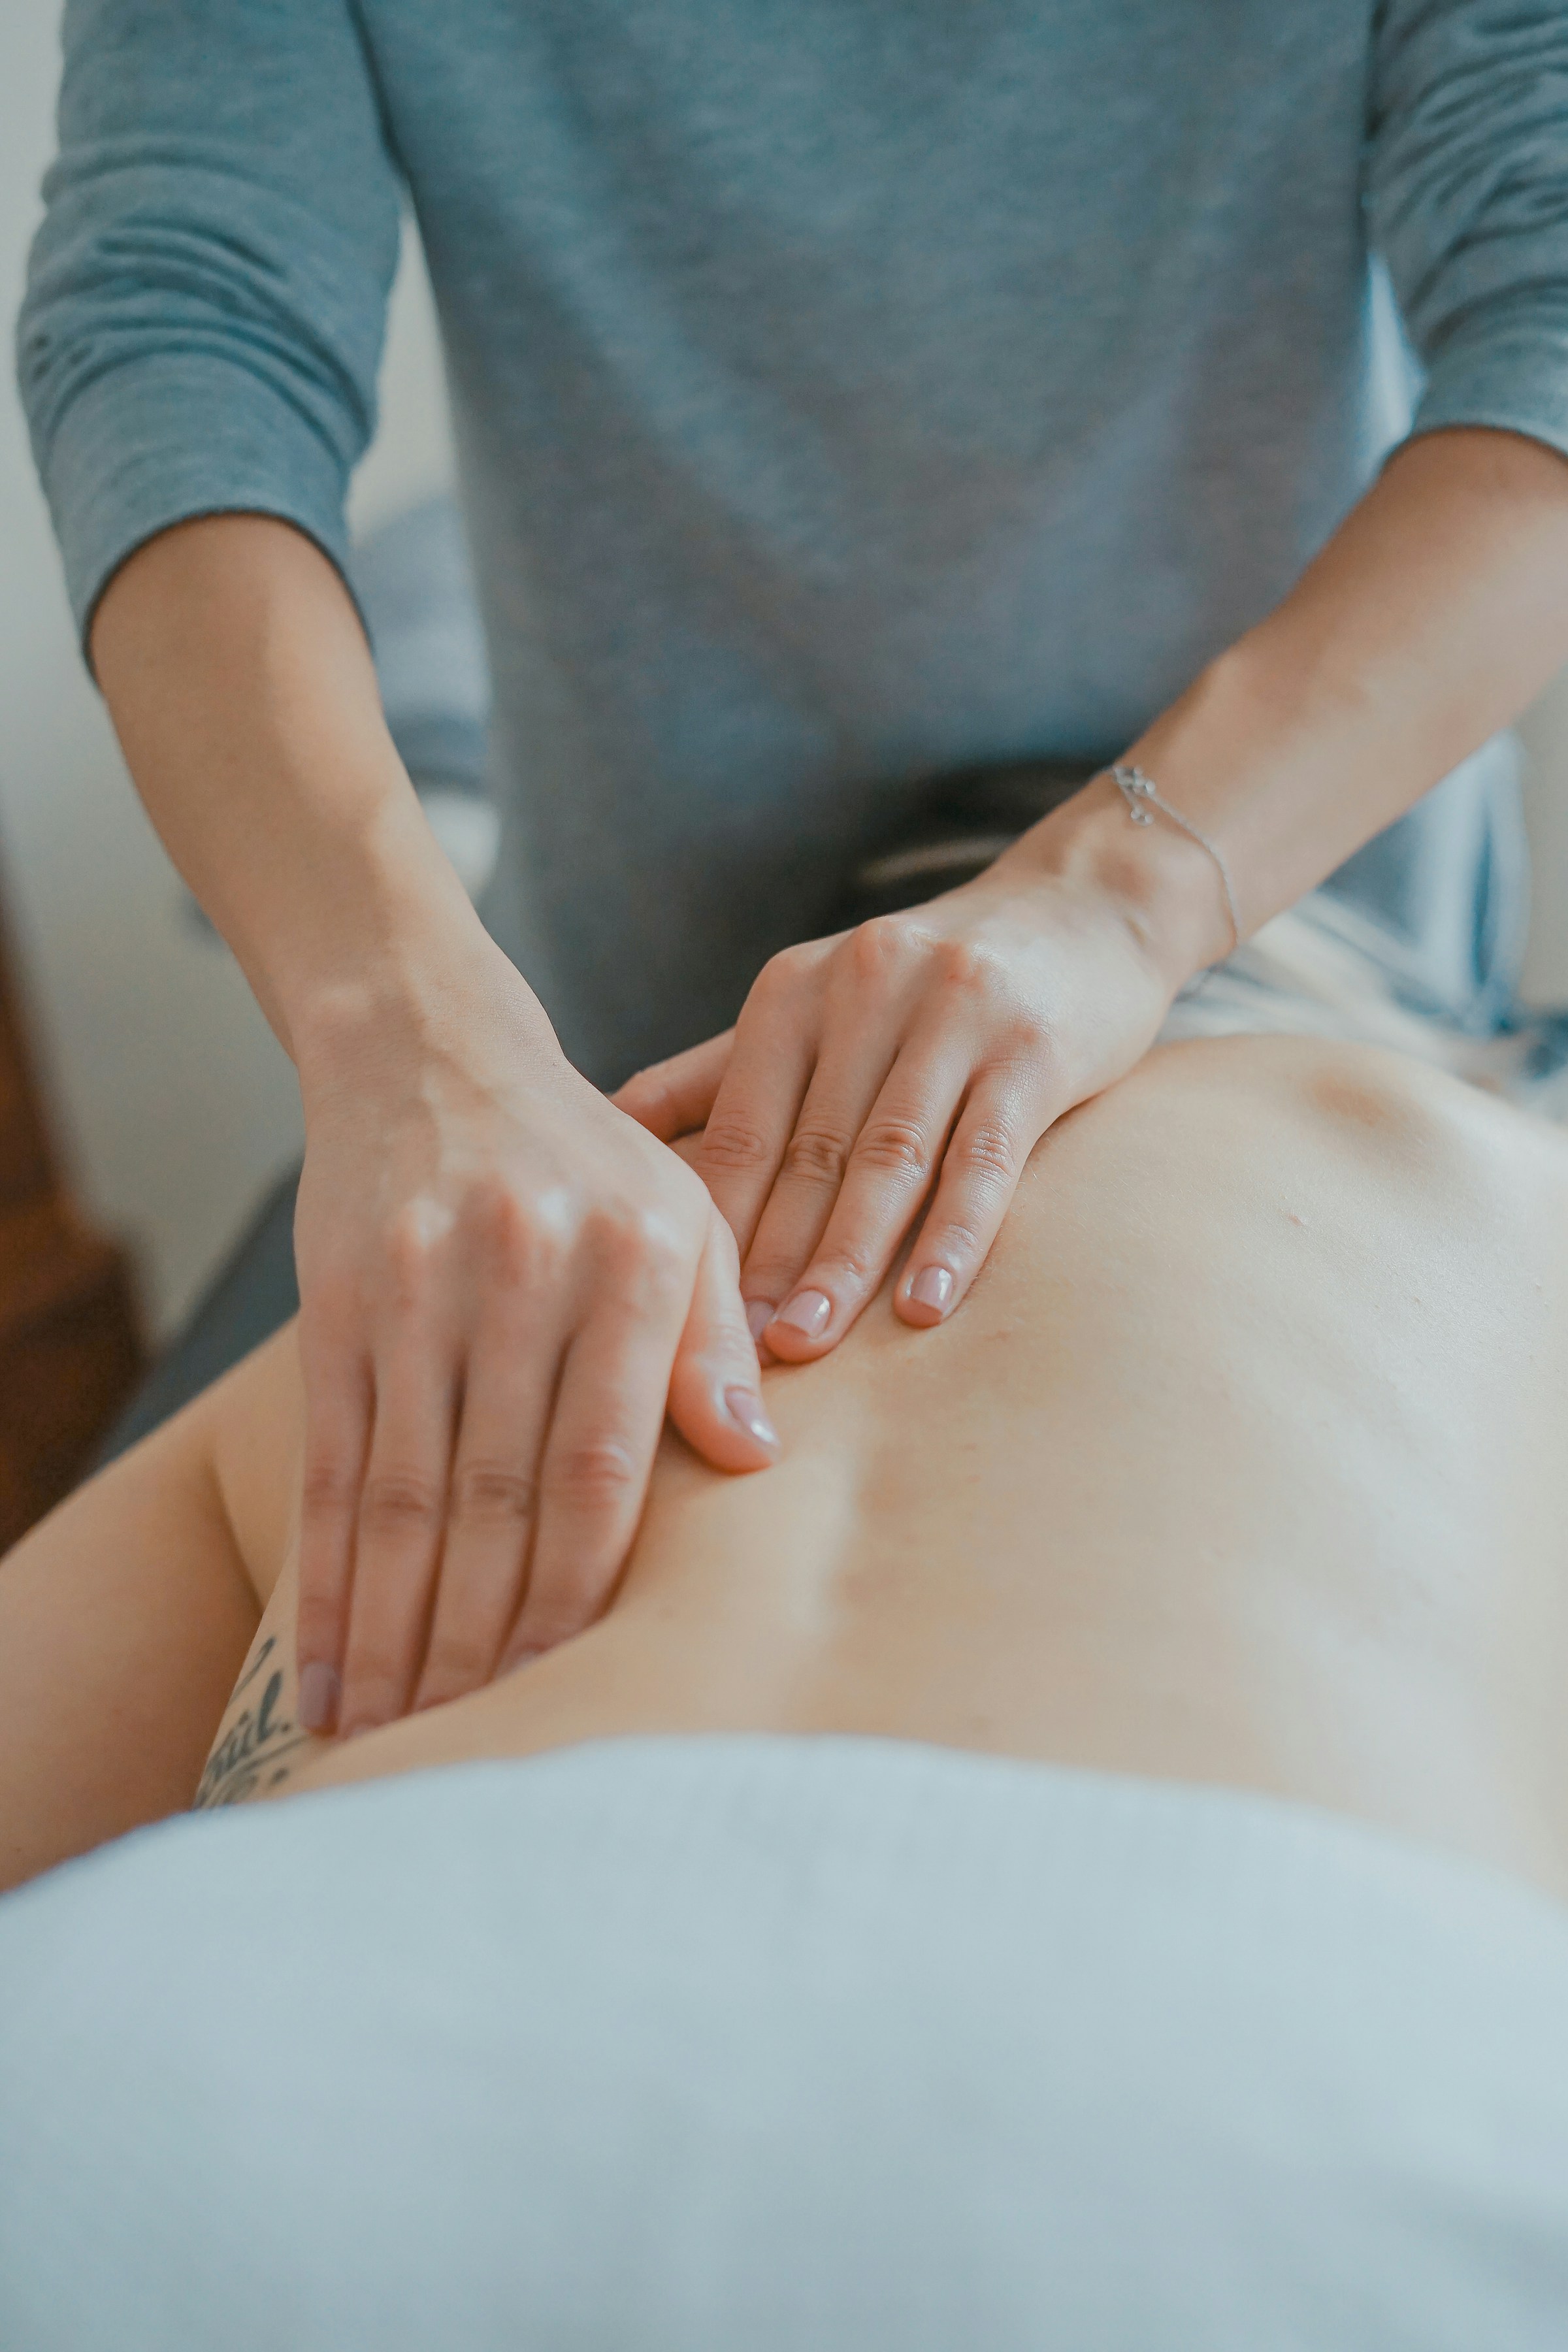 A person getting a massage | Source: Unsplash